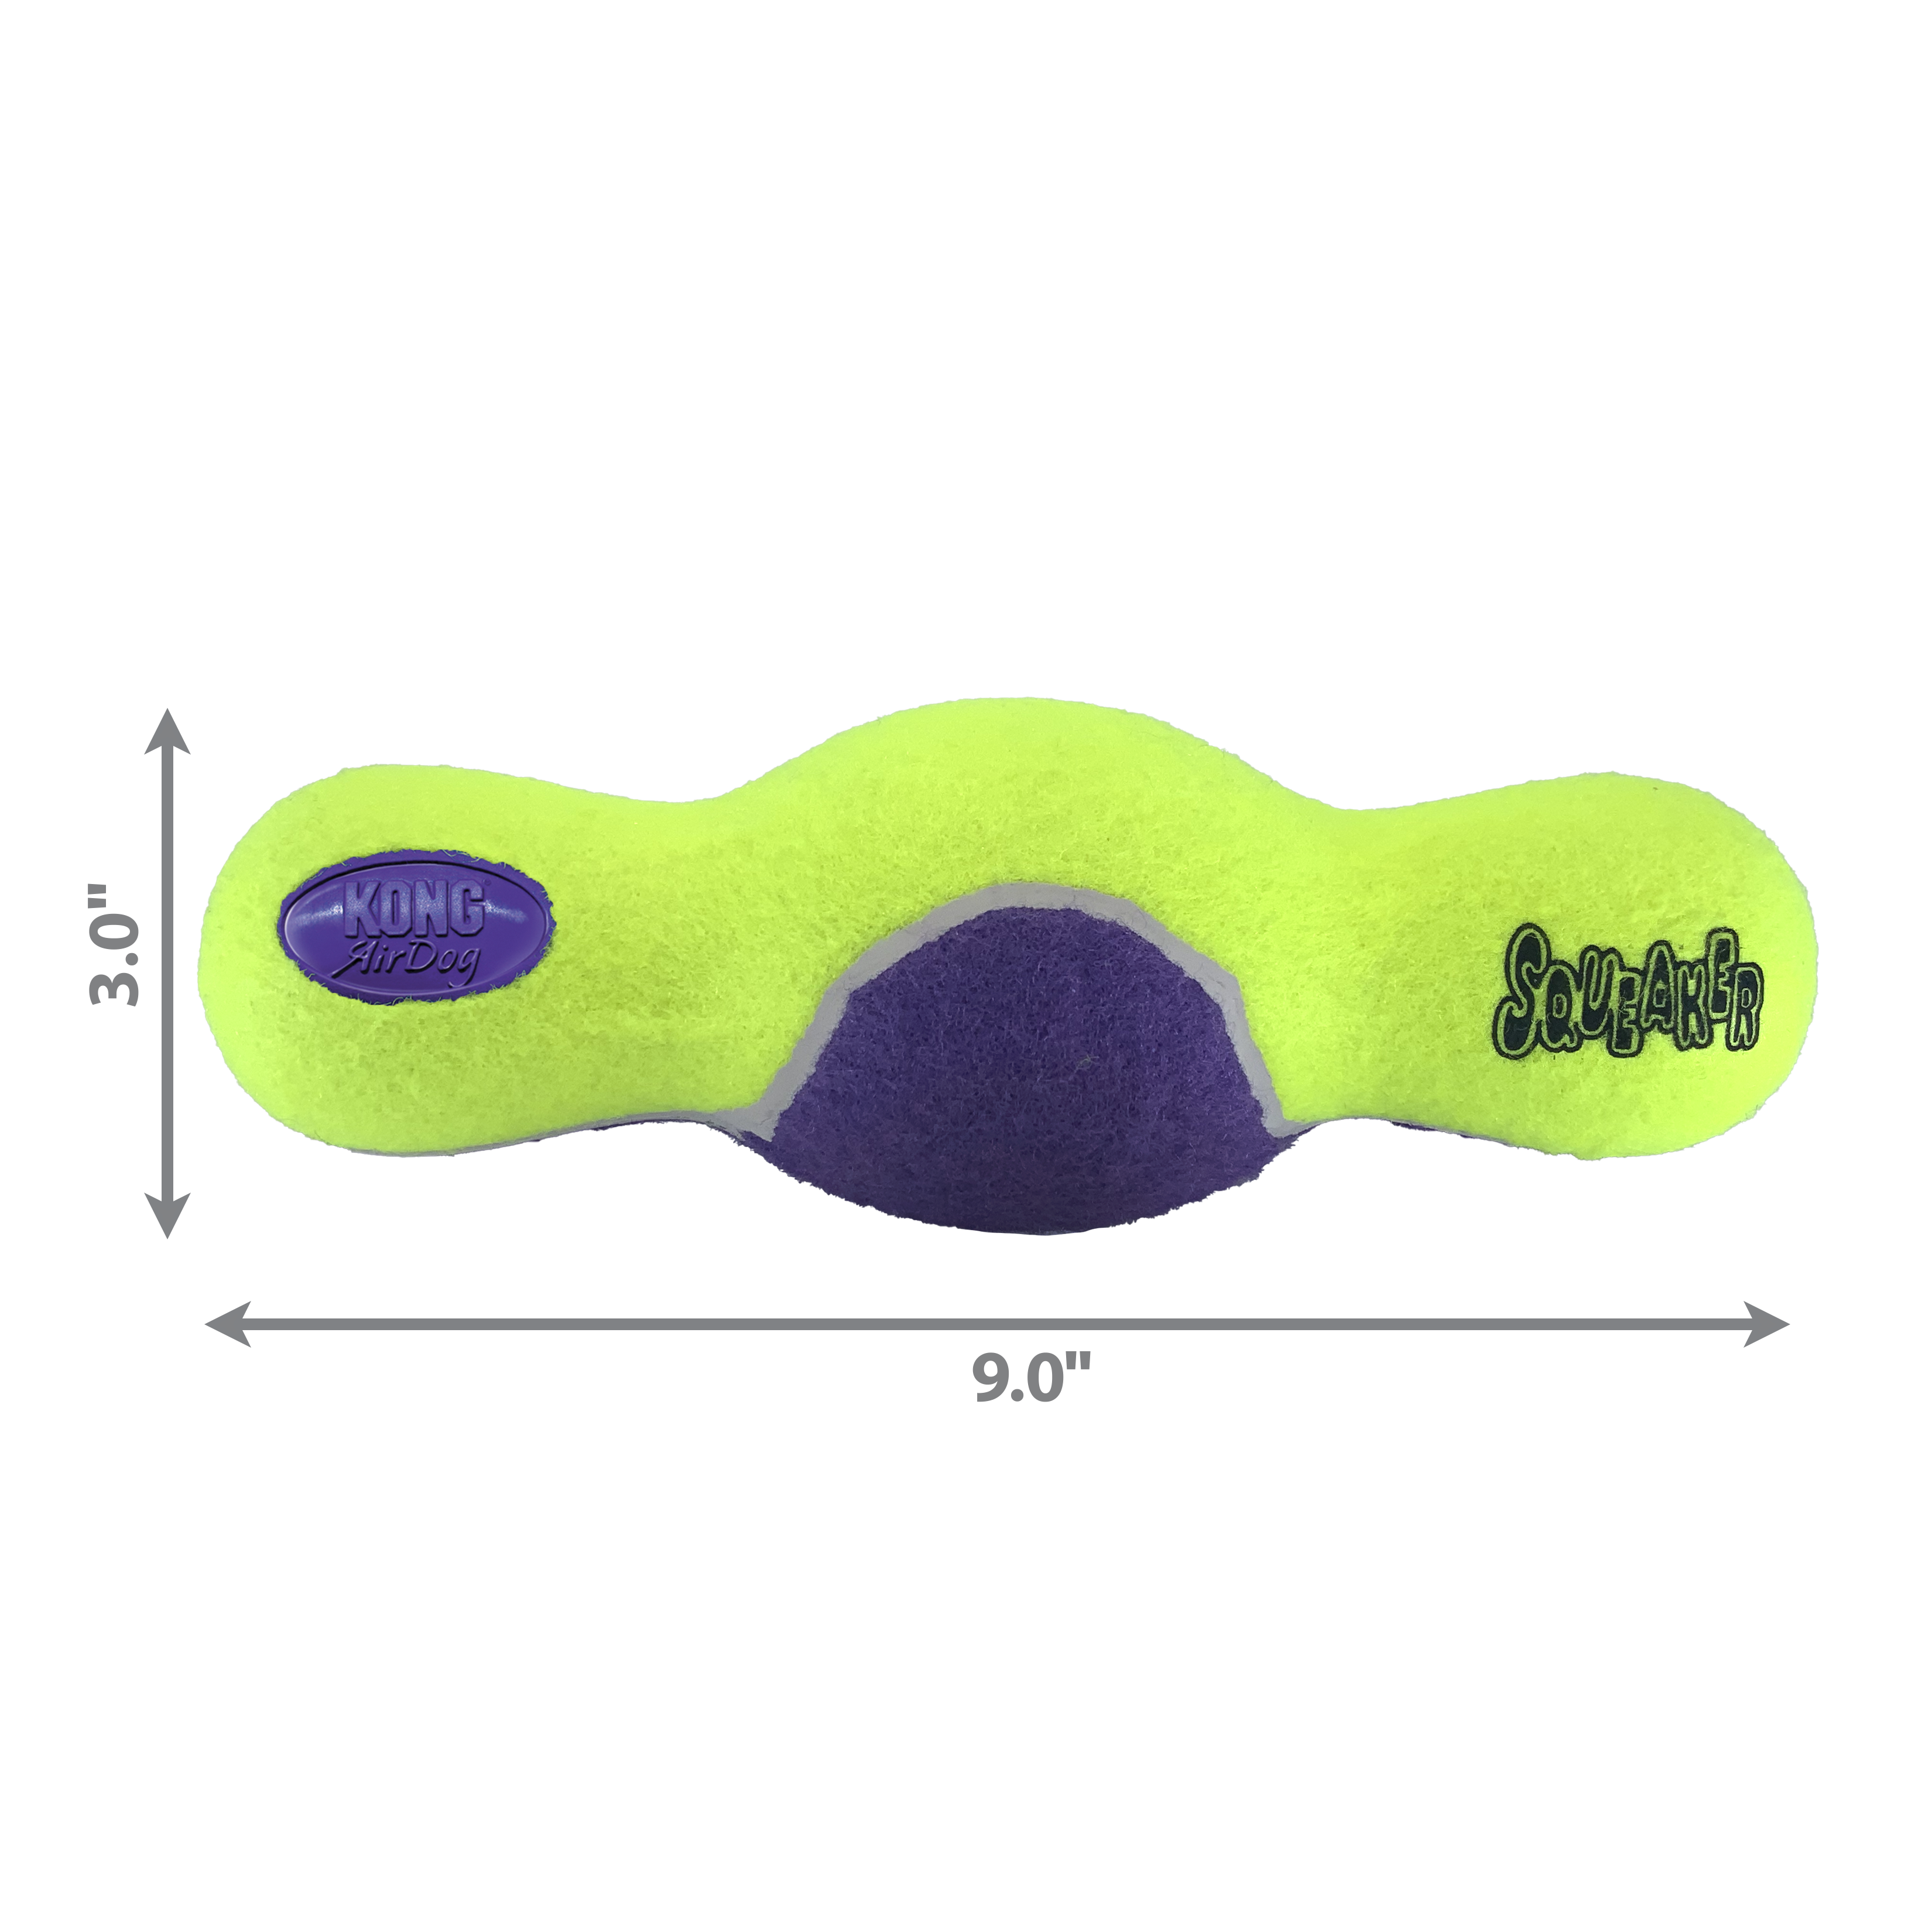 AirDog Squeaker Roller dimoffpack imagen de producto